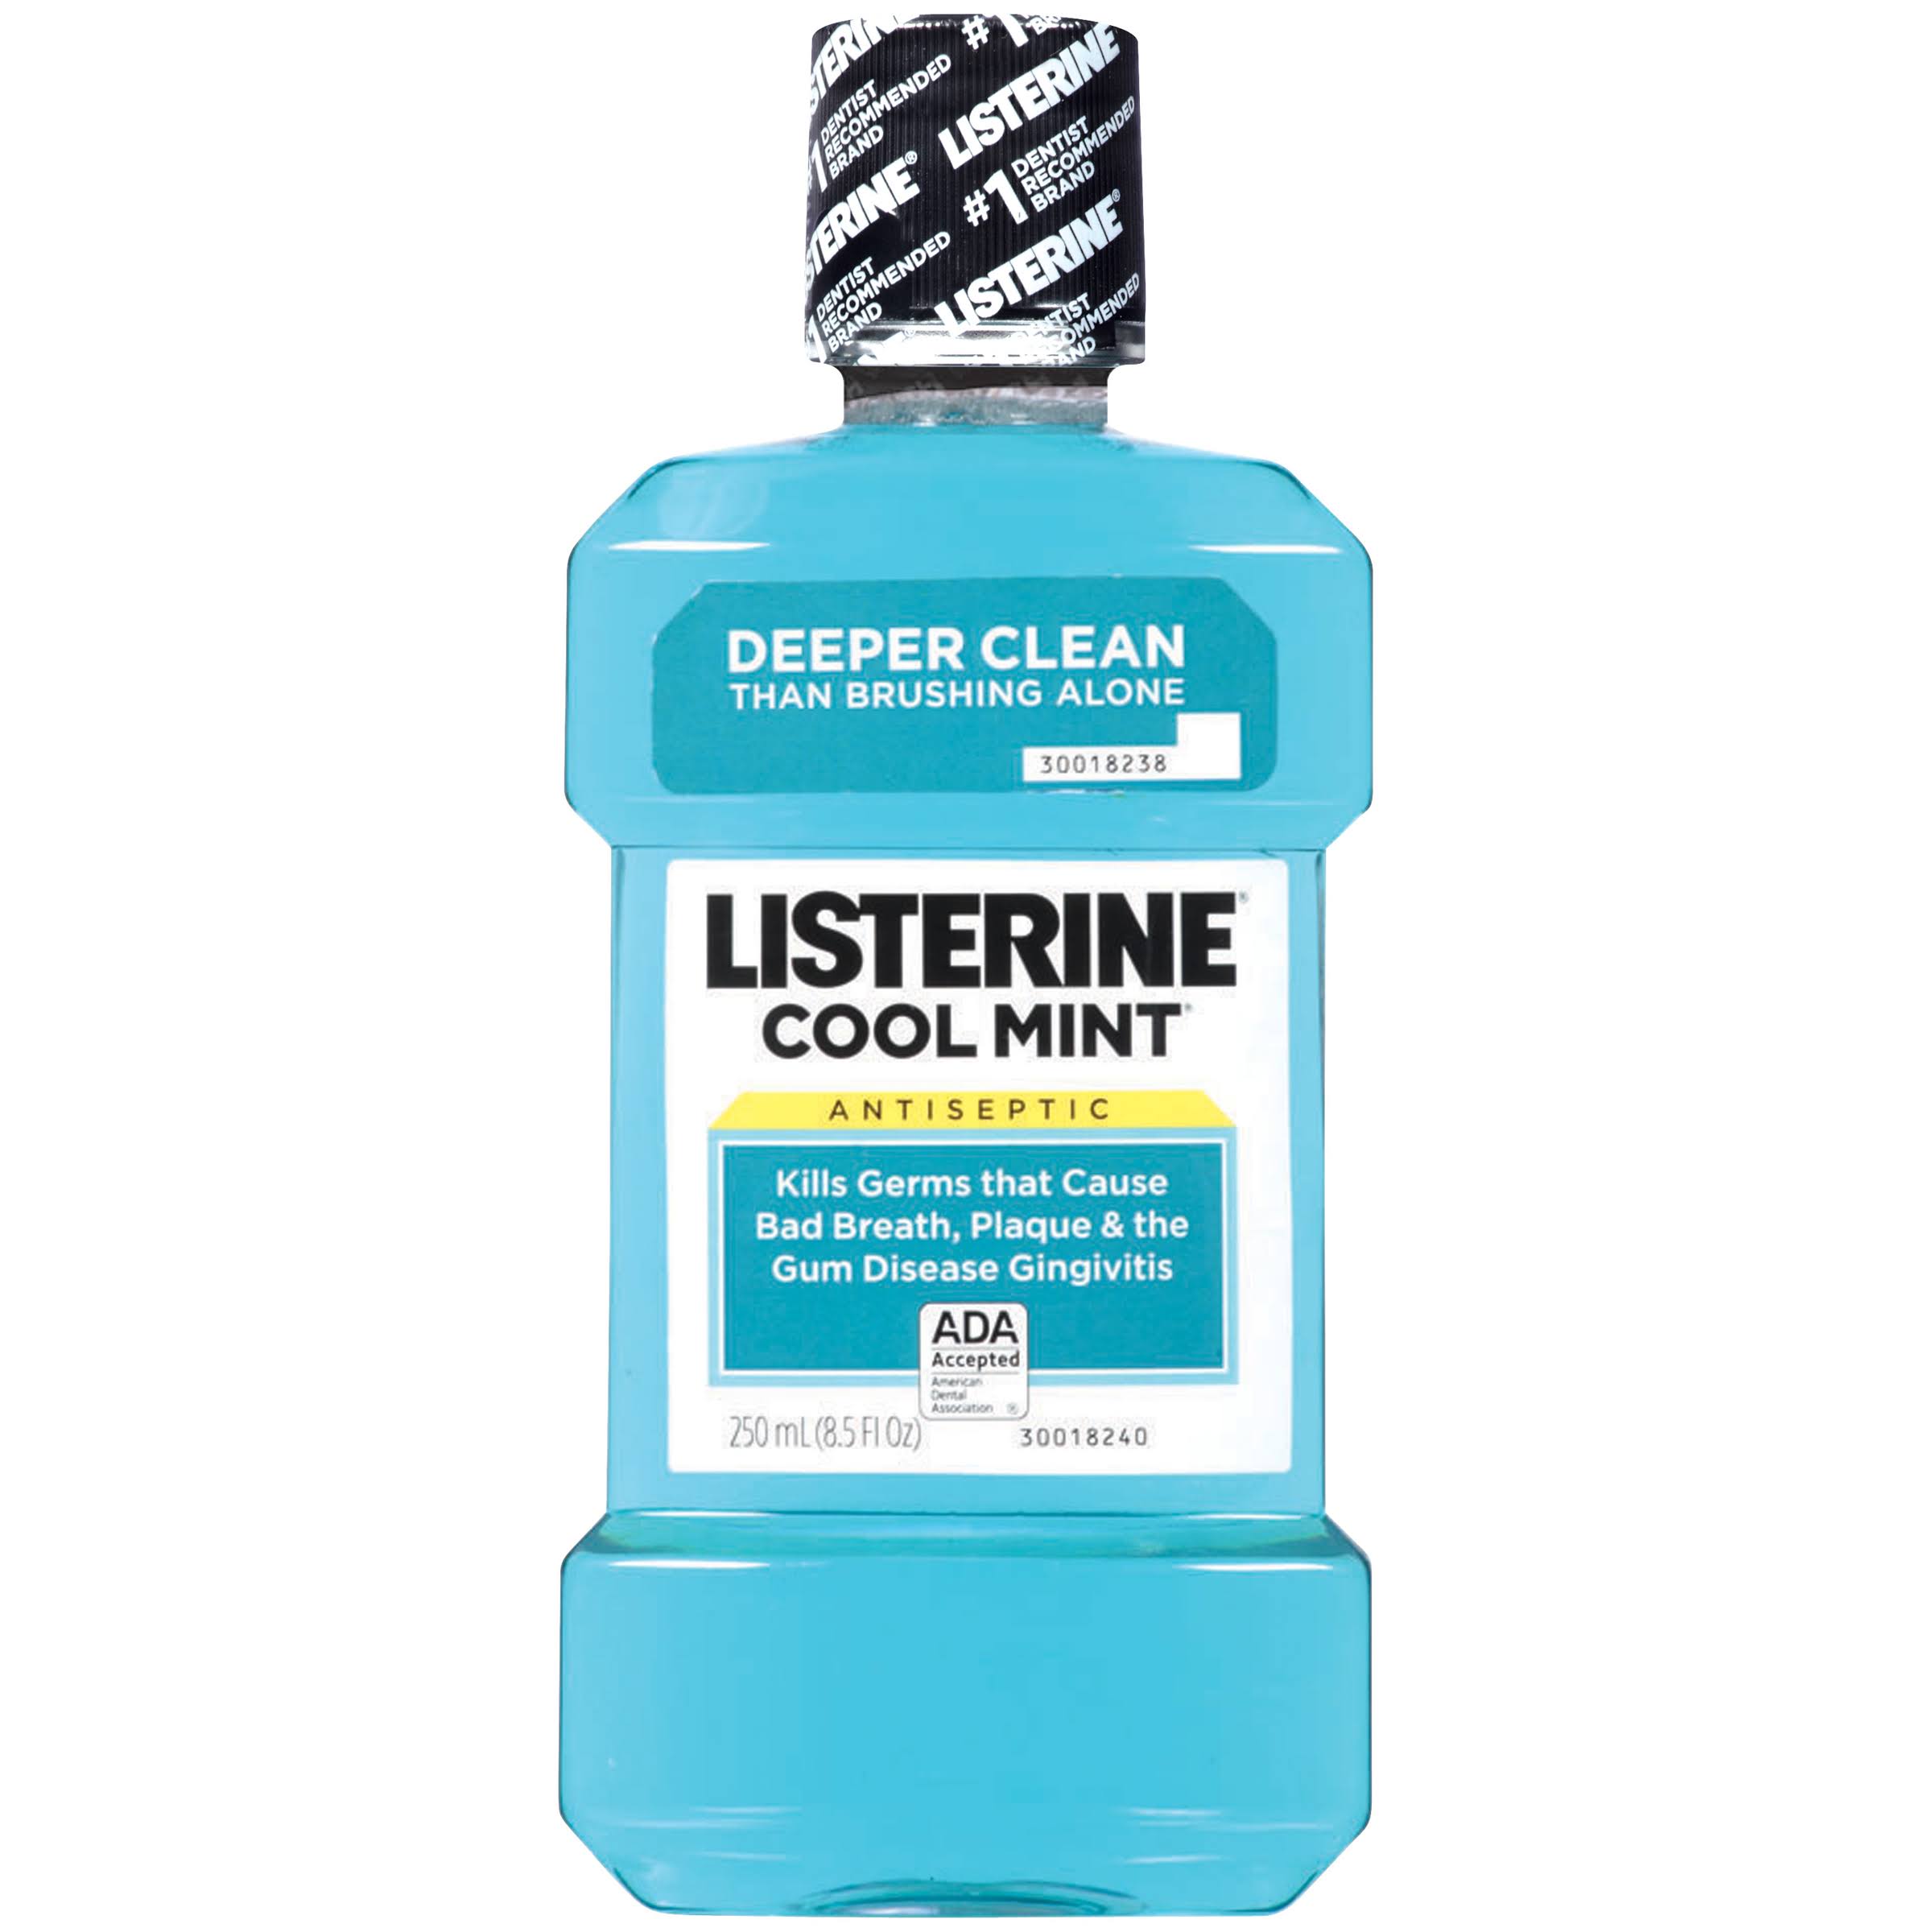 Listerine Antiseptic Mouthwash - Cool Mint, 250ml